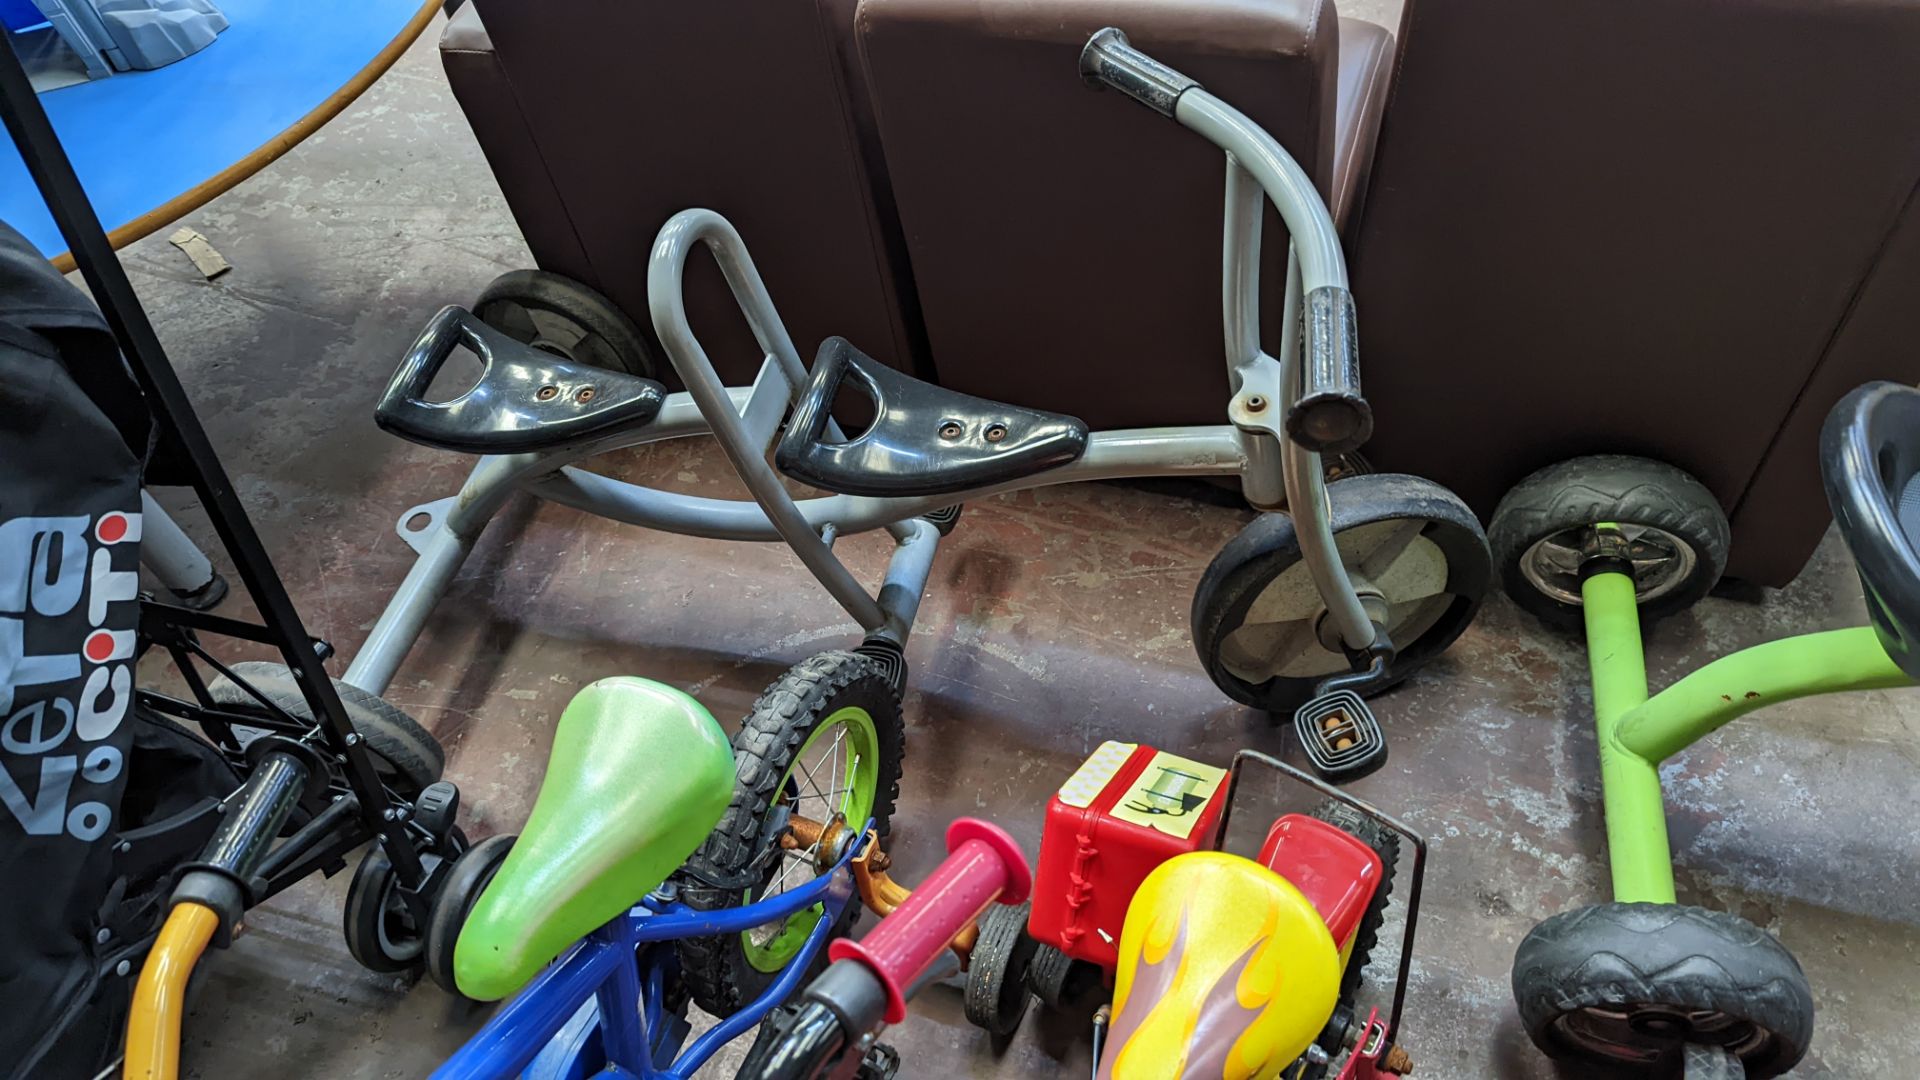 5 off children's 3-wheel bikes, including one tandem bike - Image 7 of 12